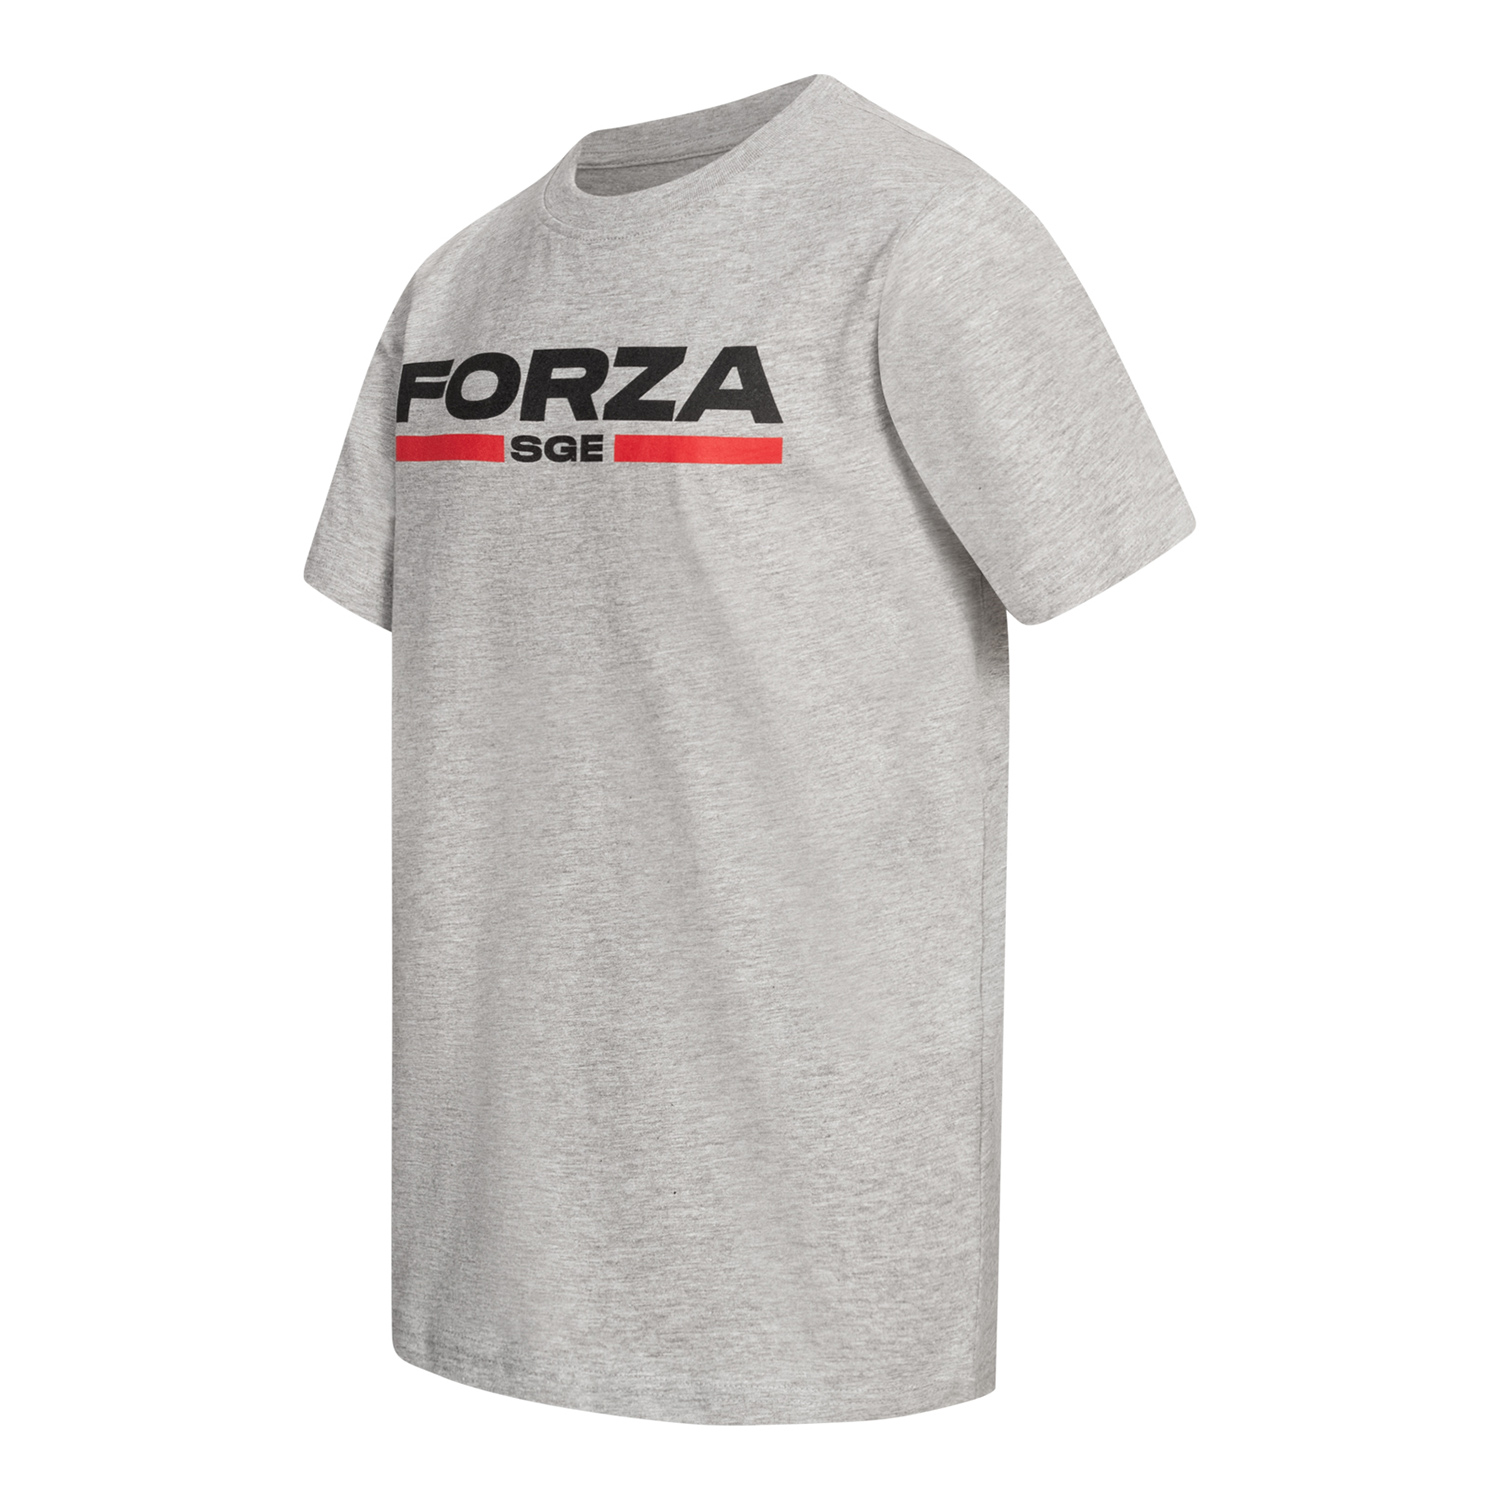 Bild 3: Kids T-Shirt Forza SGE